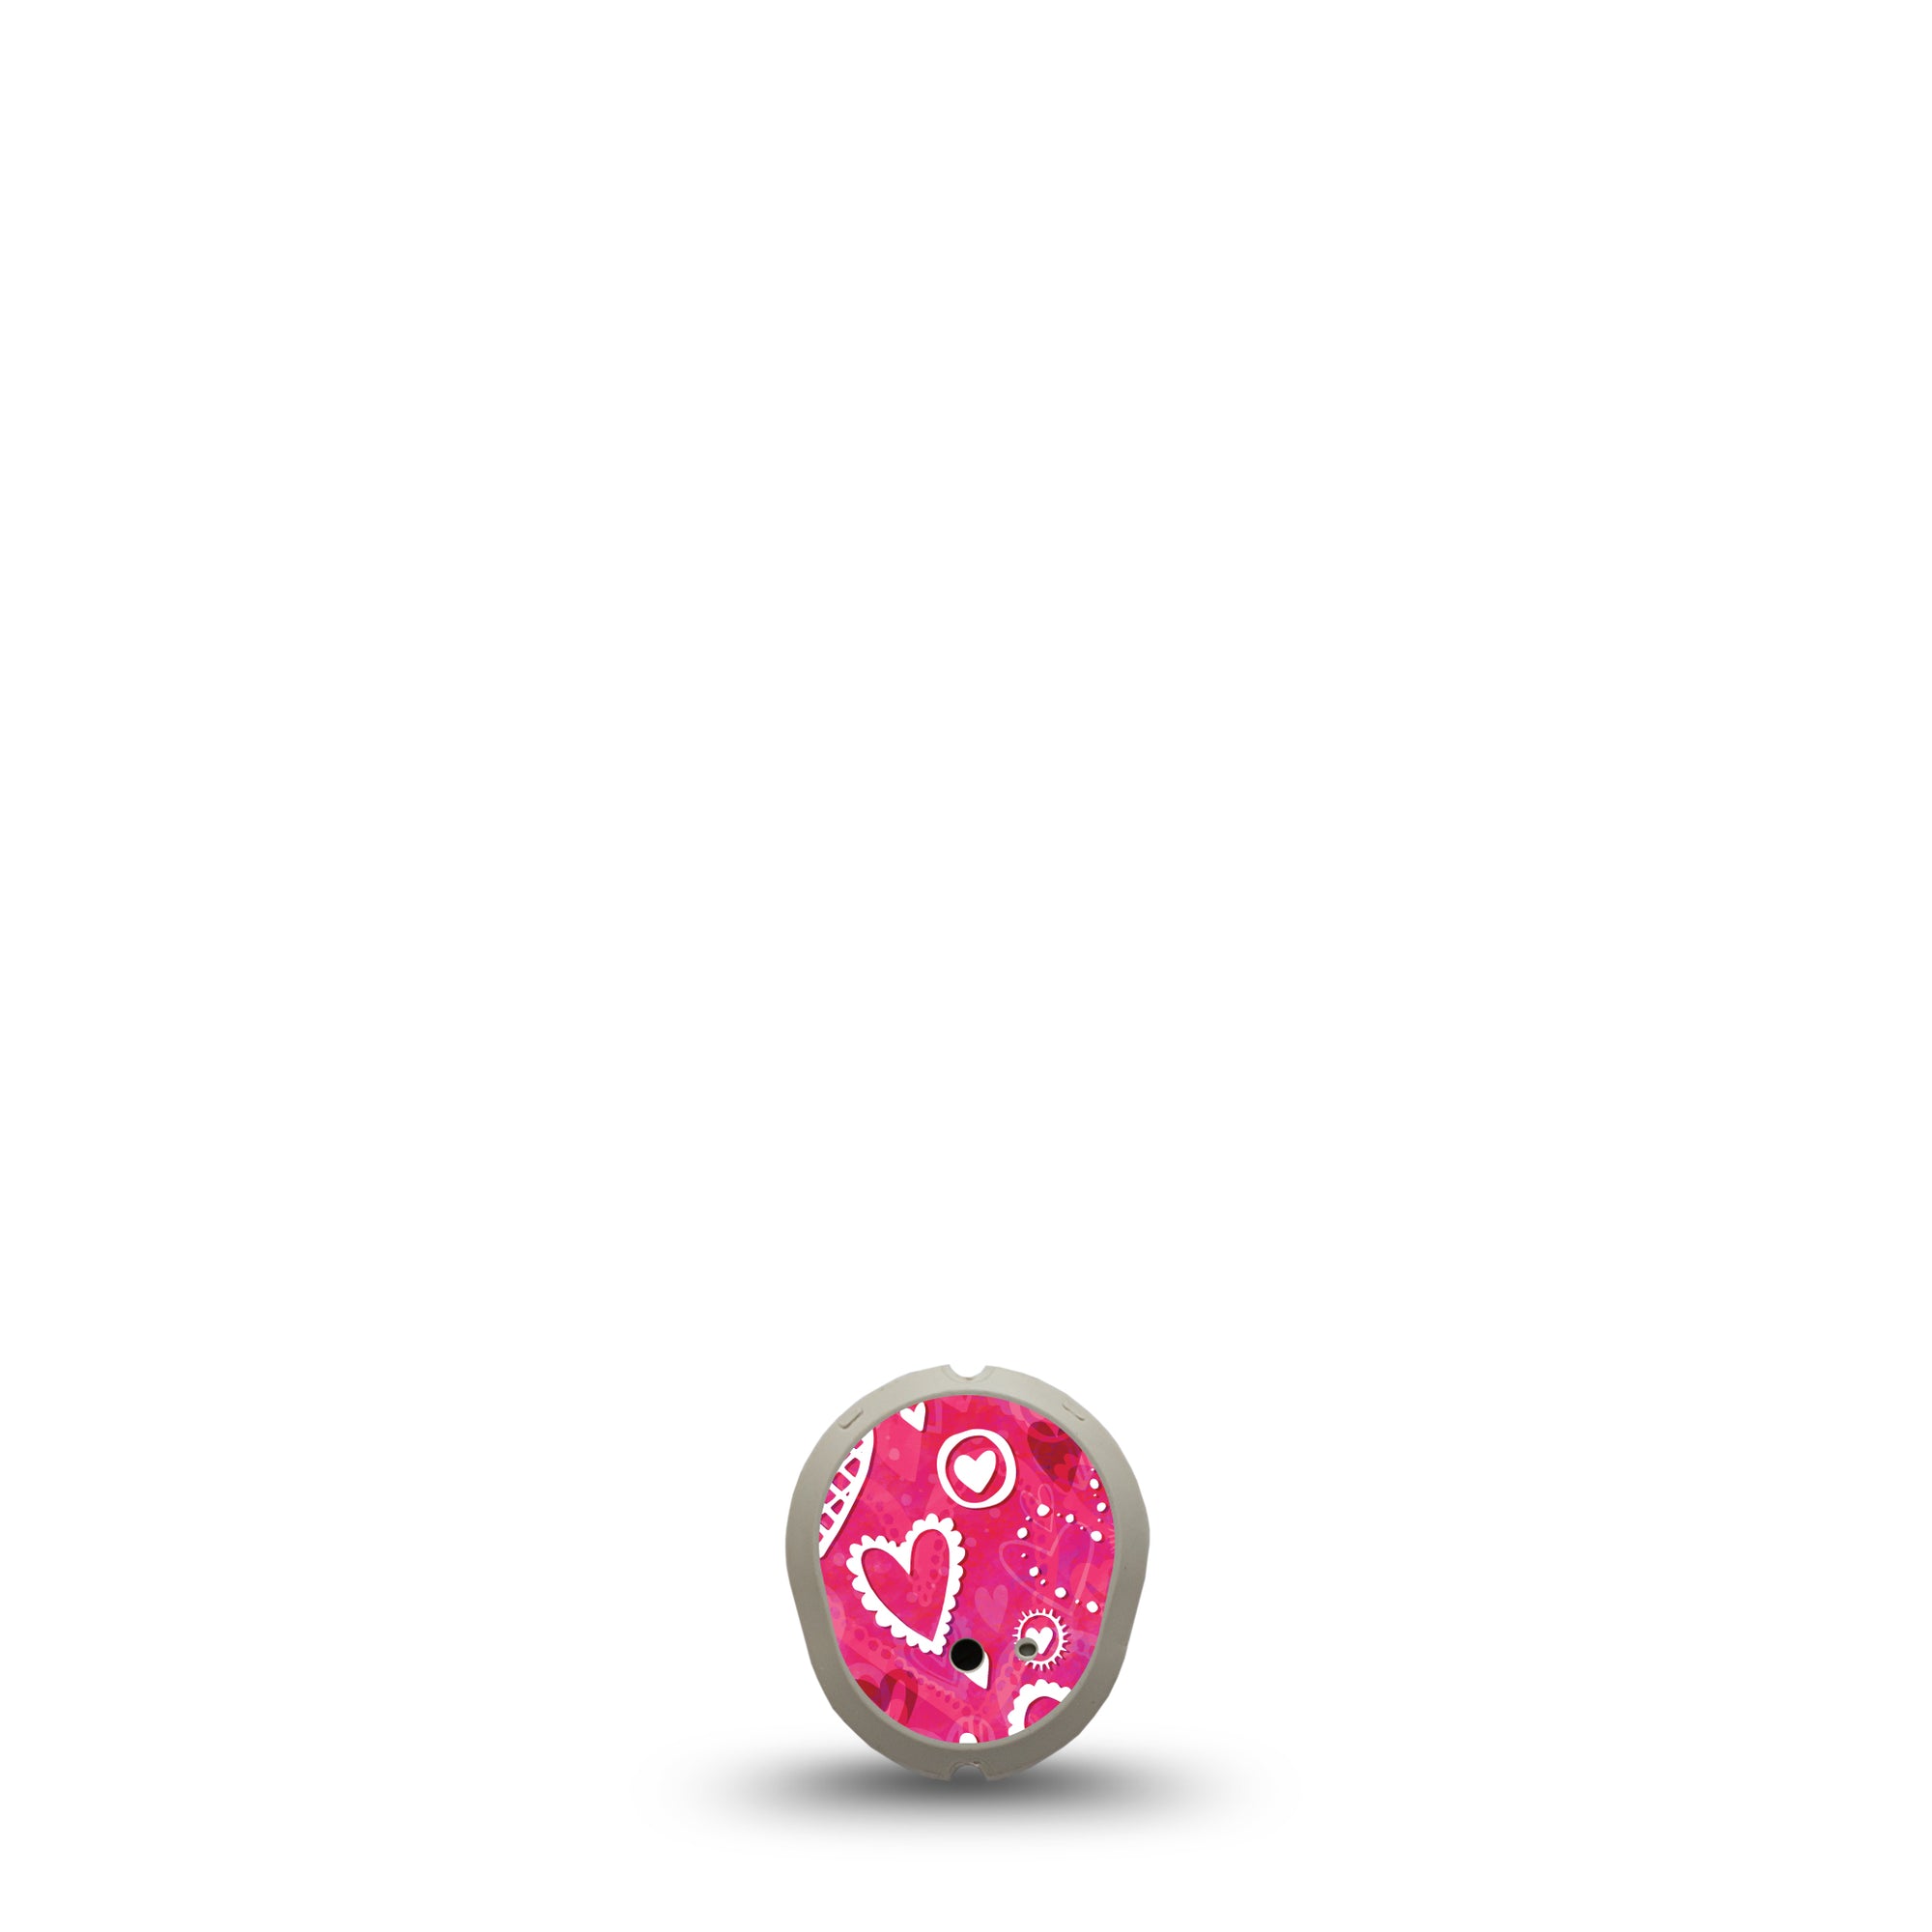 Whimsical Hearts Dexcom G7 Transmitter Sticker, Single, Variety of Pink Cute Hearts Dexcom Transmitter Vinyl Sticker, Dexcom Stelo Glucose Biosensor System